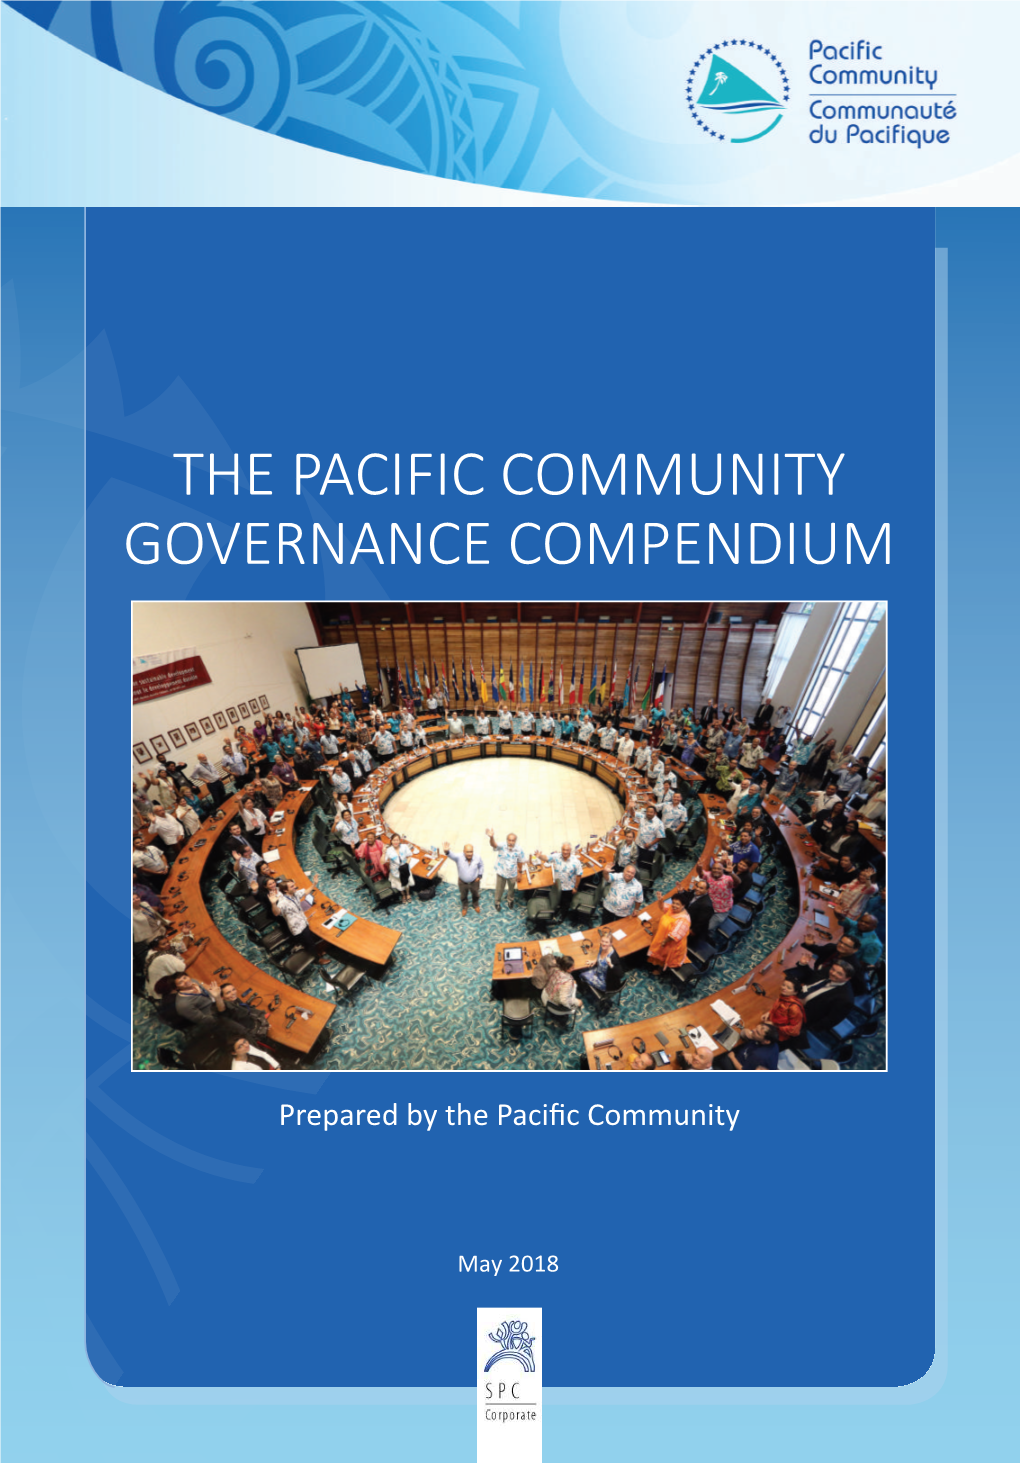 The Pacific Community Governance Compendium